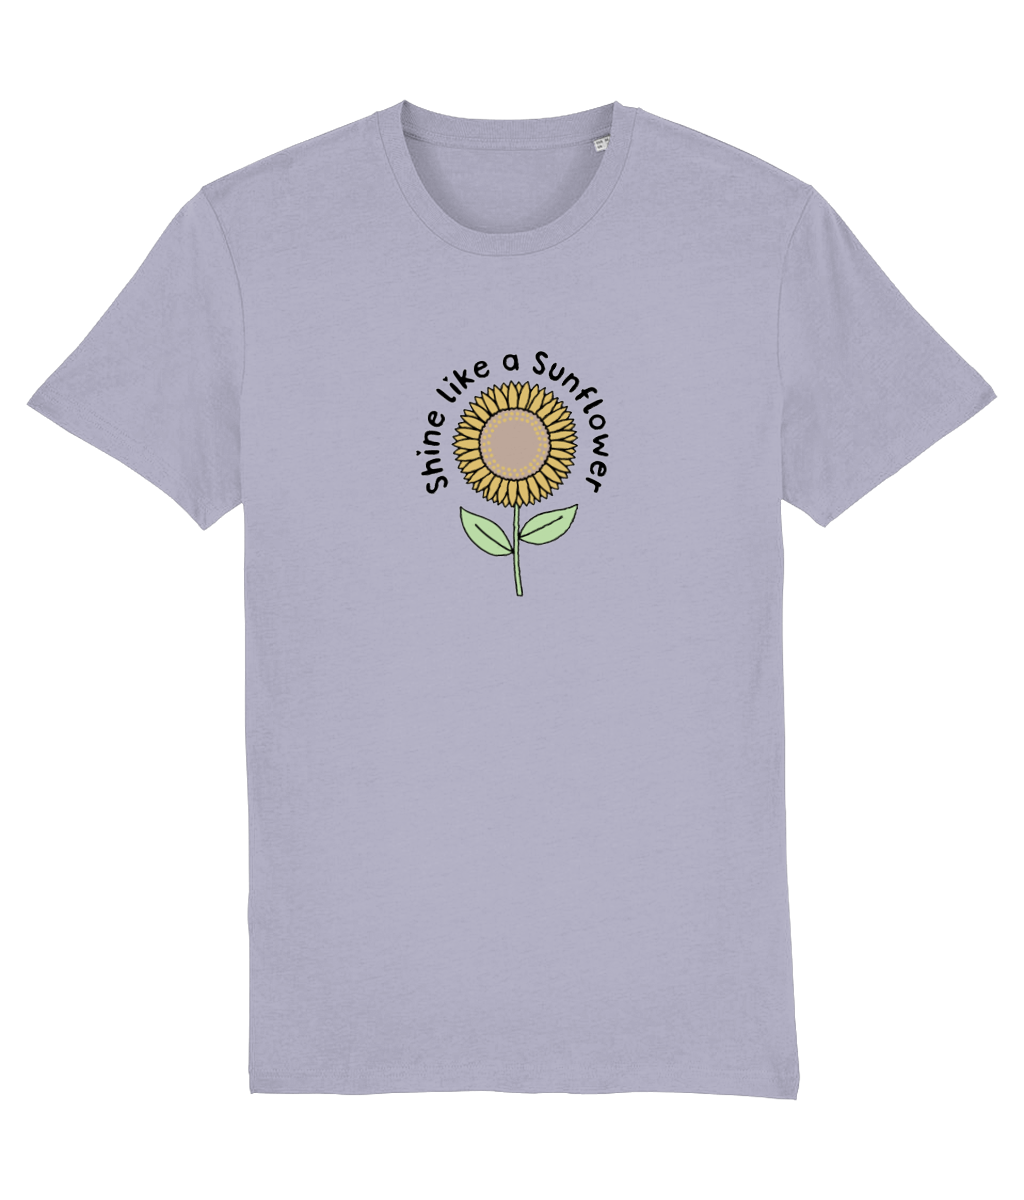 Shine Like A Sunflower - Adult T- Shirt - Light Multi Colour Available